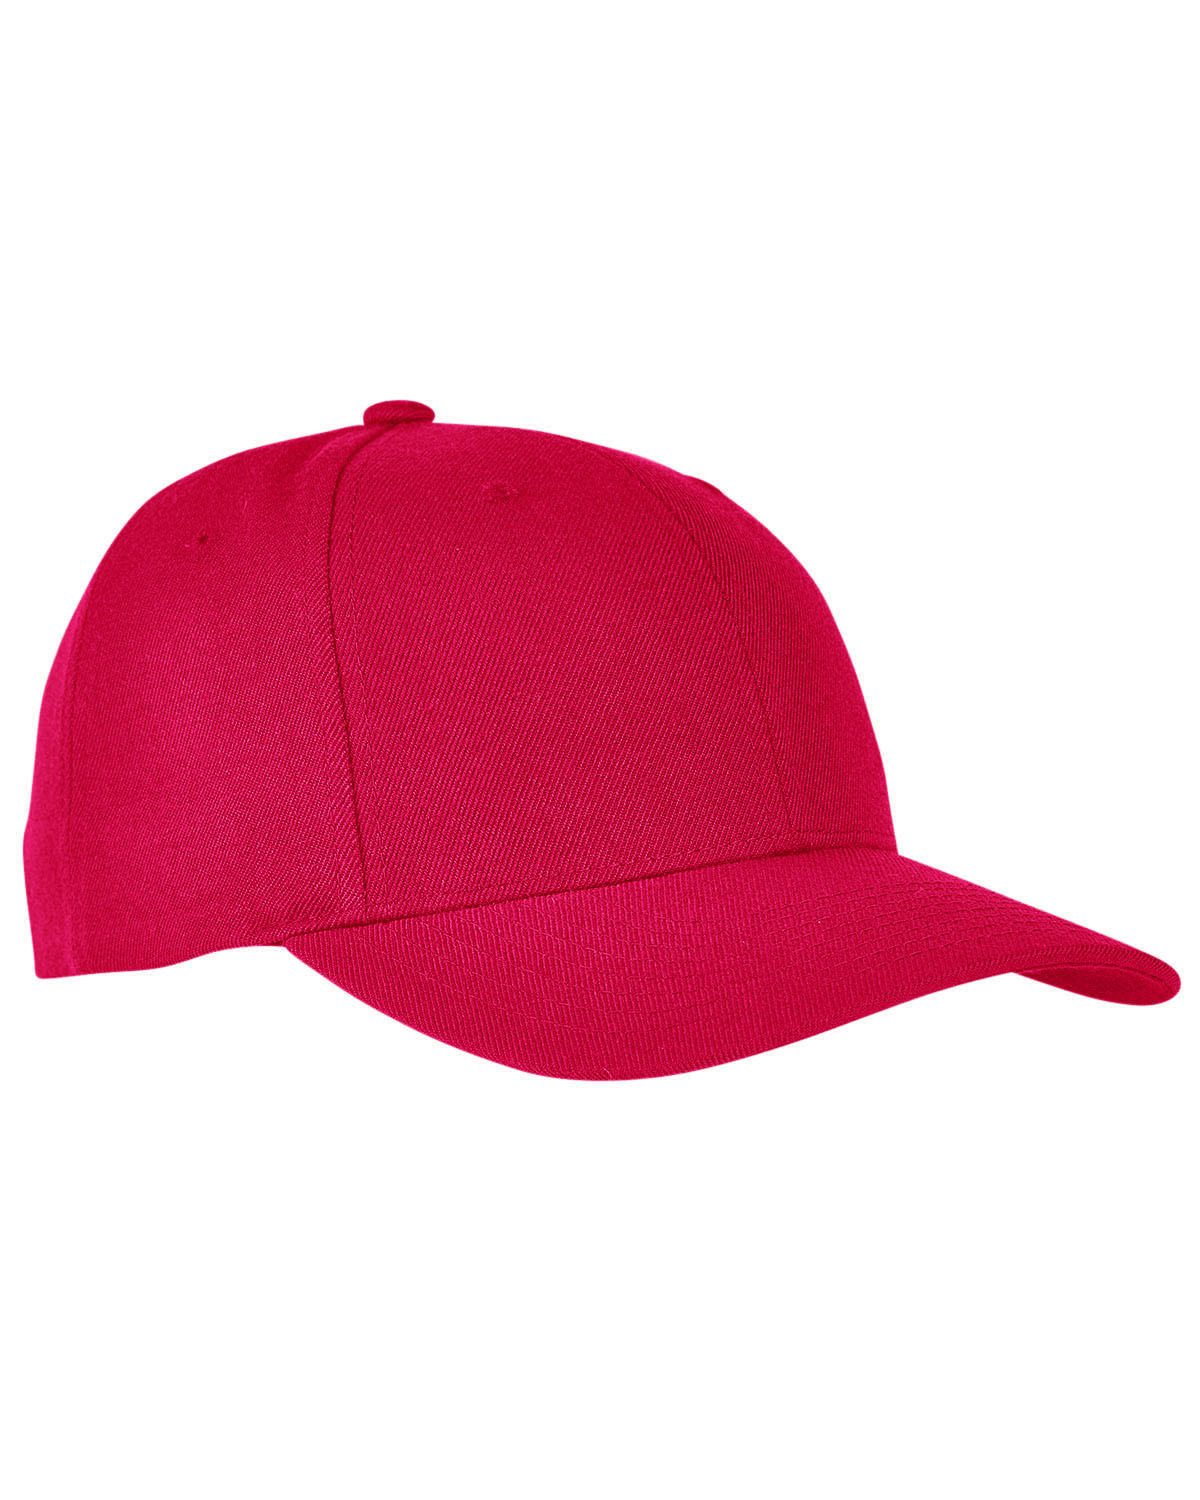 Yupoong® 6789M Premium Curved Visor Adjustable Snapback Hat Plain Blank Ball Cap